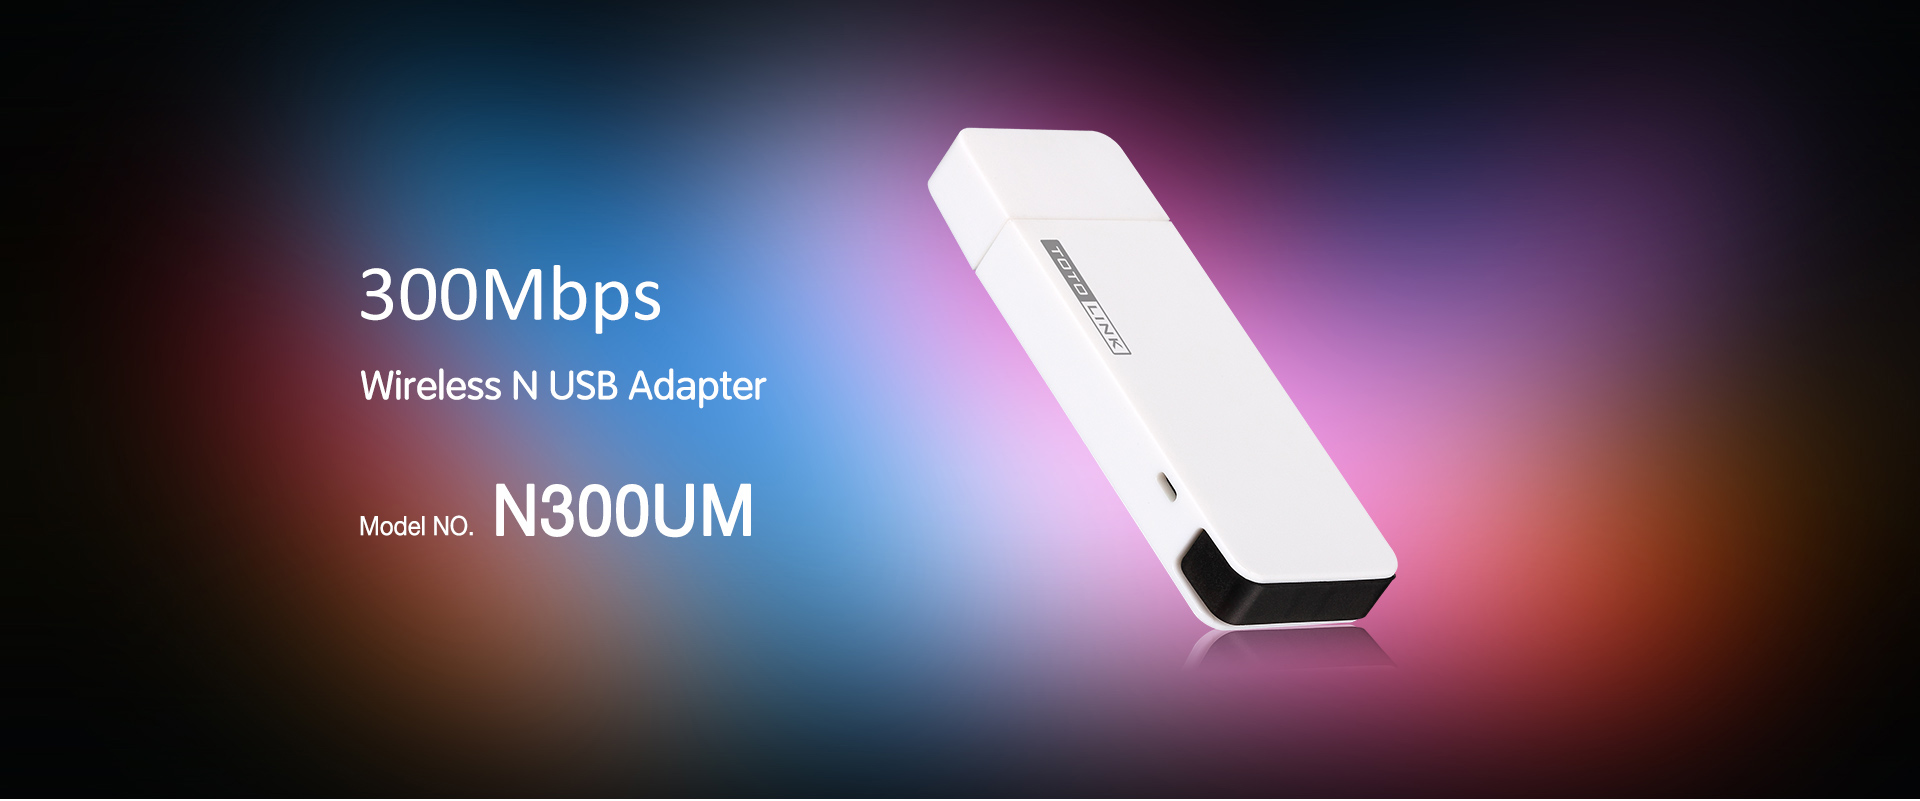  N300UM-300Mbps-Wireless-N-USB-adapter